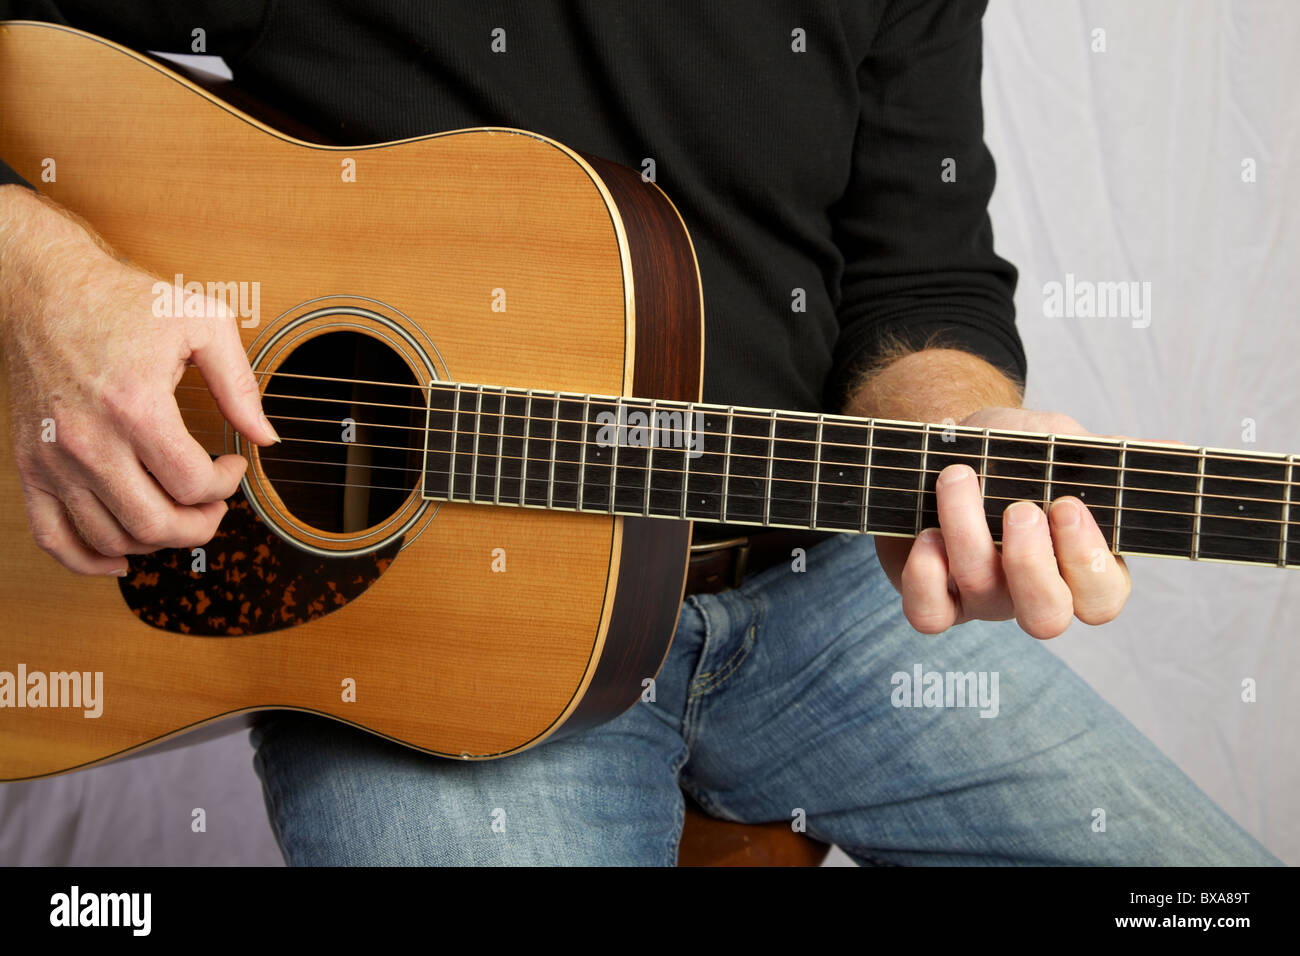 Man playing guitar. Face not shown. Stock Photo